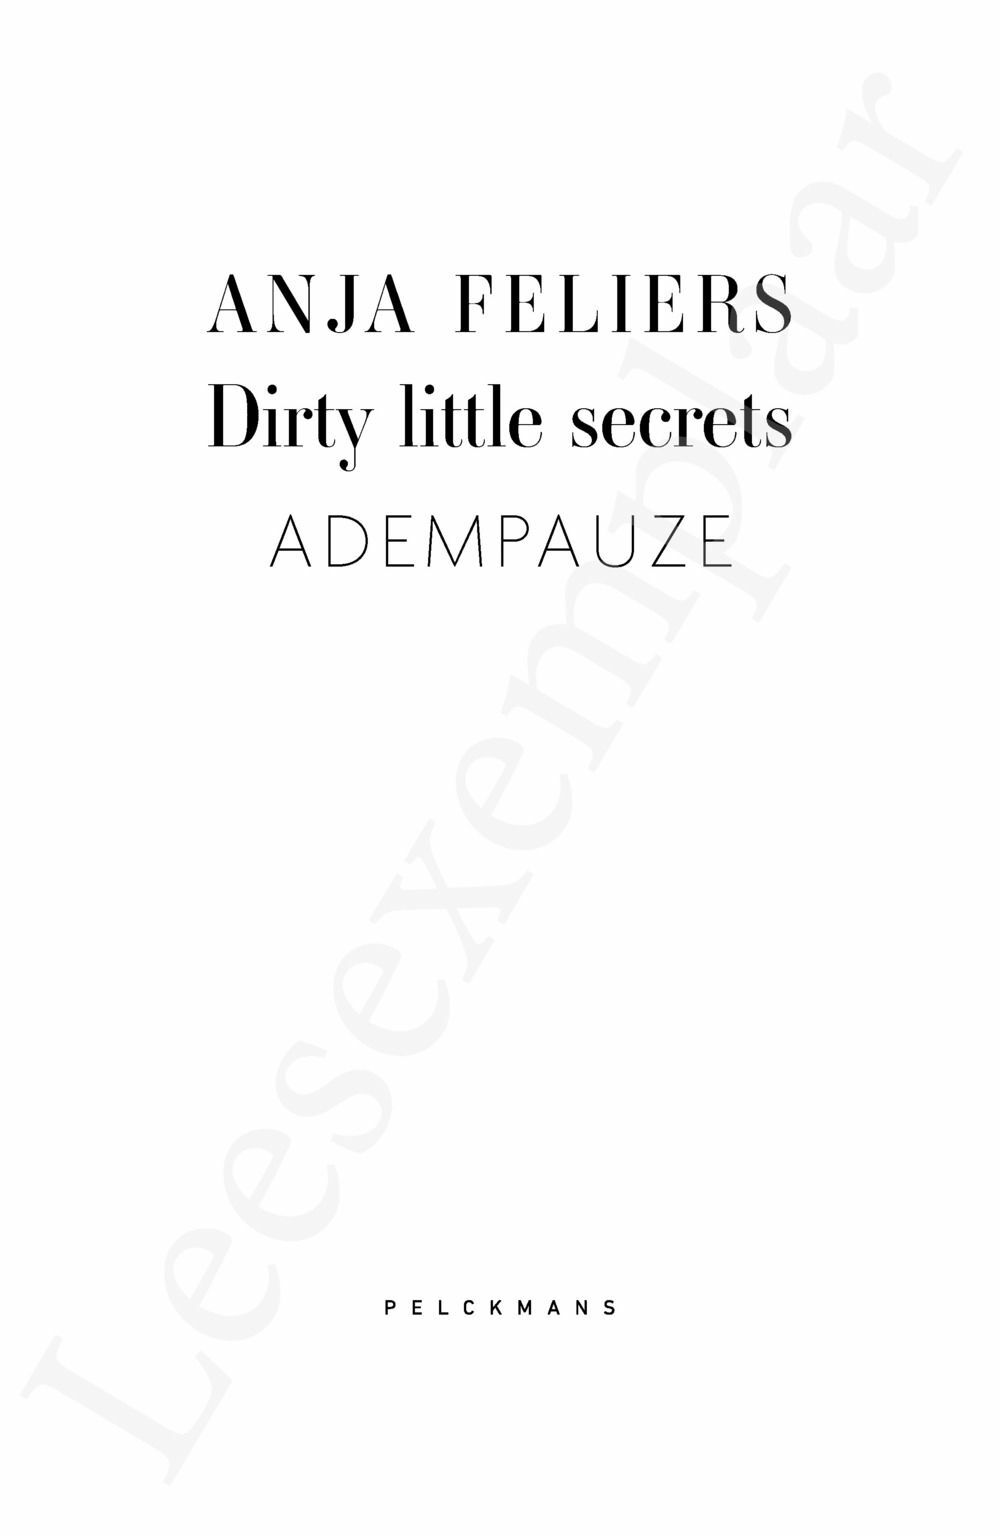 Preview: Dirty Little Secrets: Adempauze